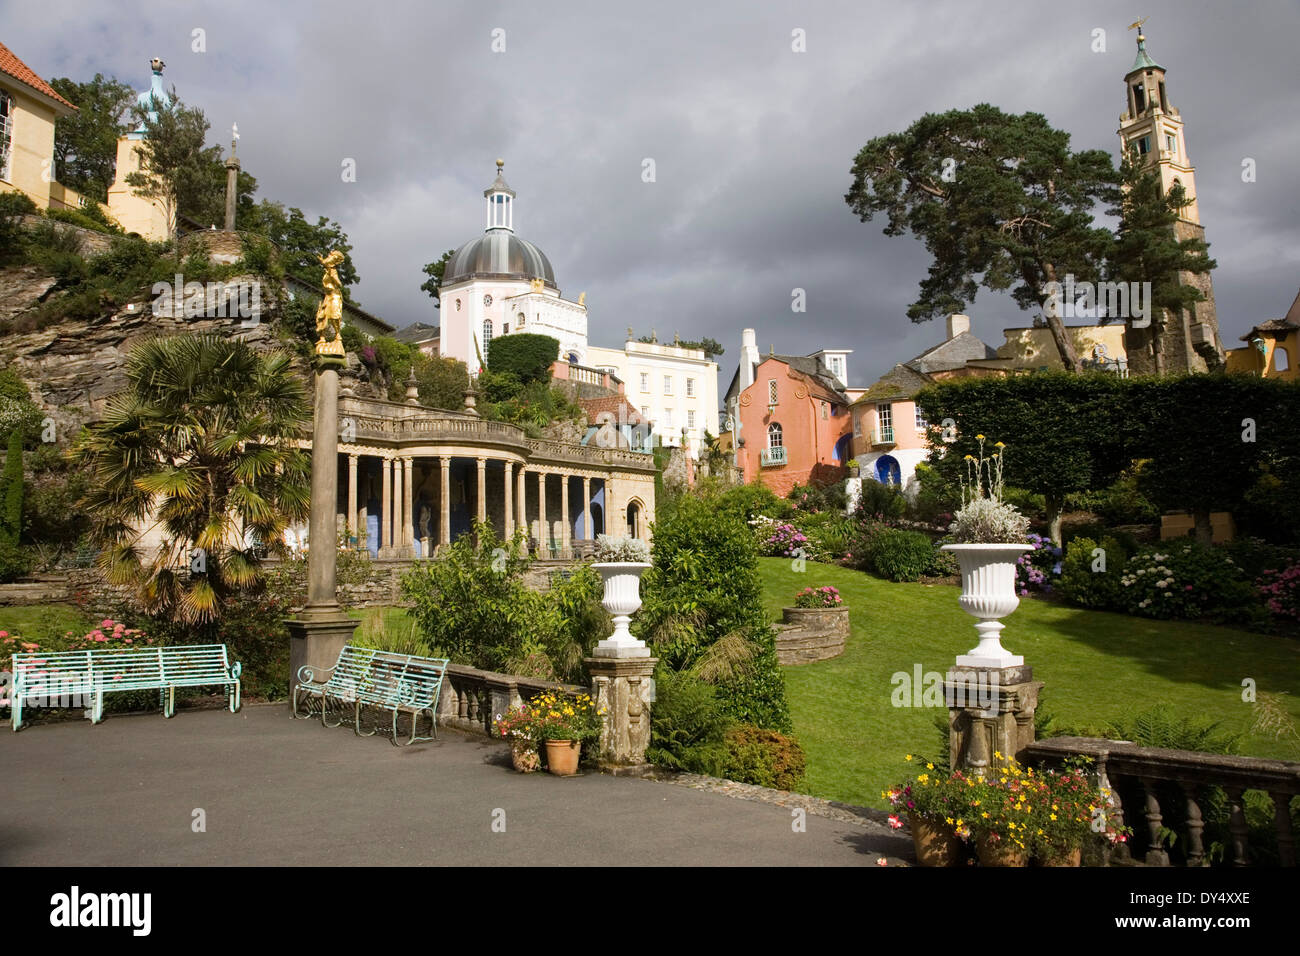 Village and ornamental gardens, Portmeirion, Wales, United Kingdom Stock Photo